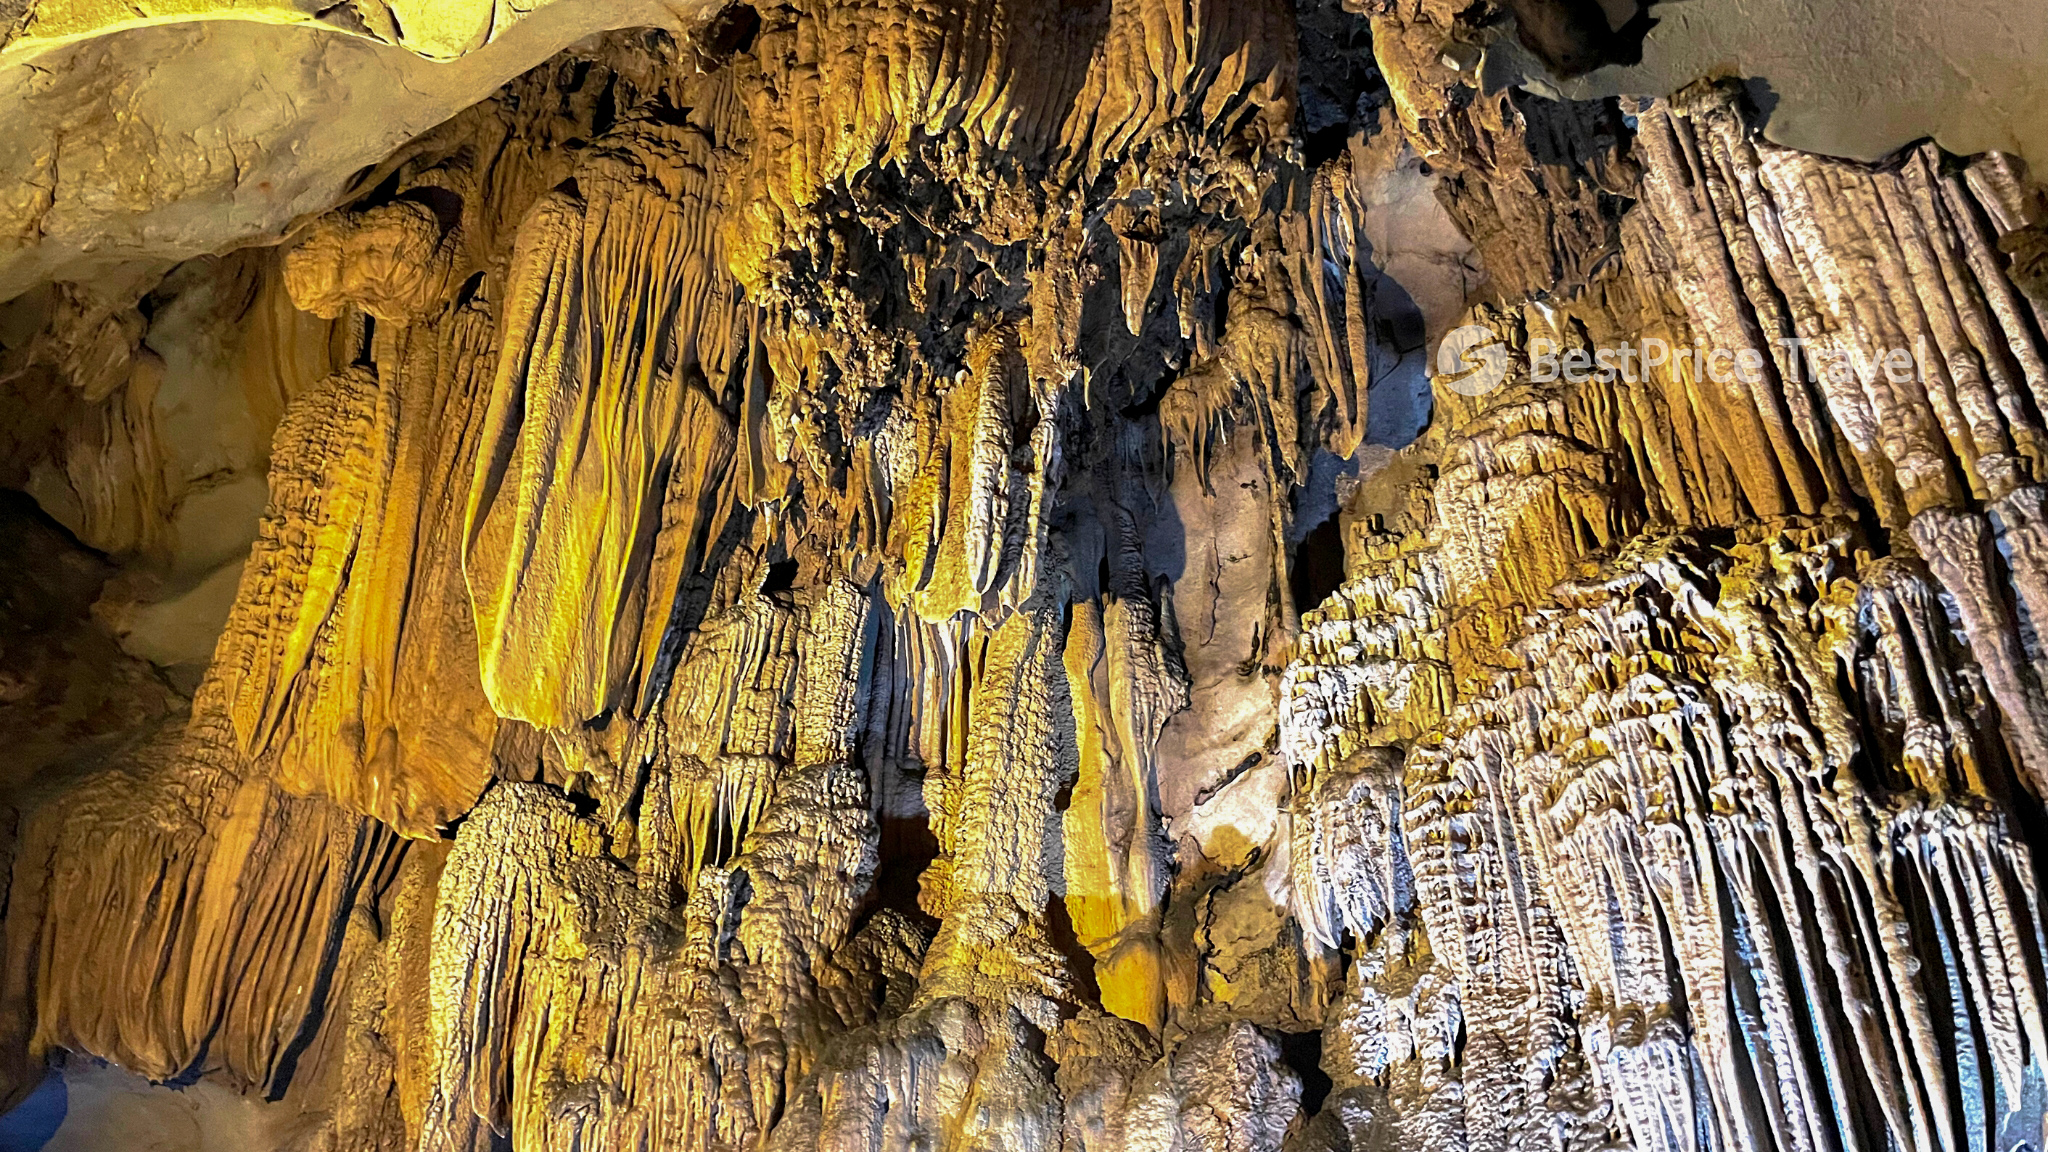 Trung Trang Cave inside